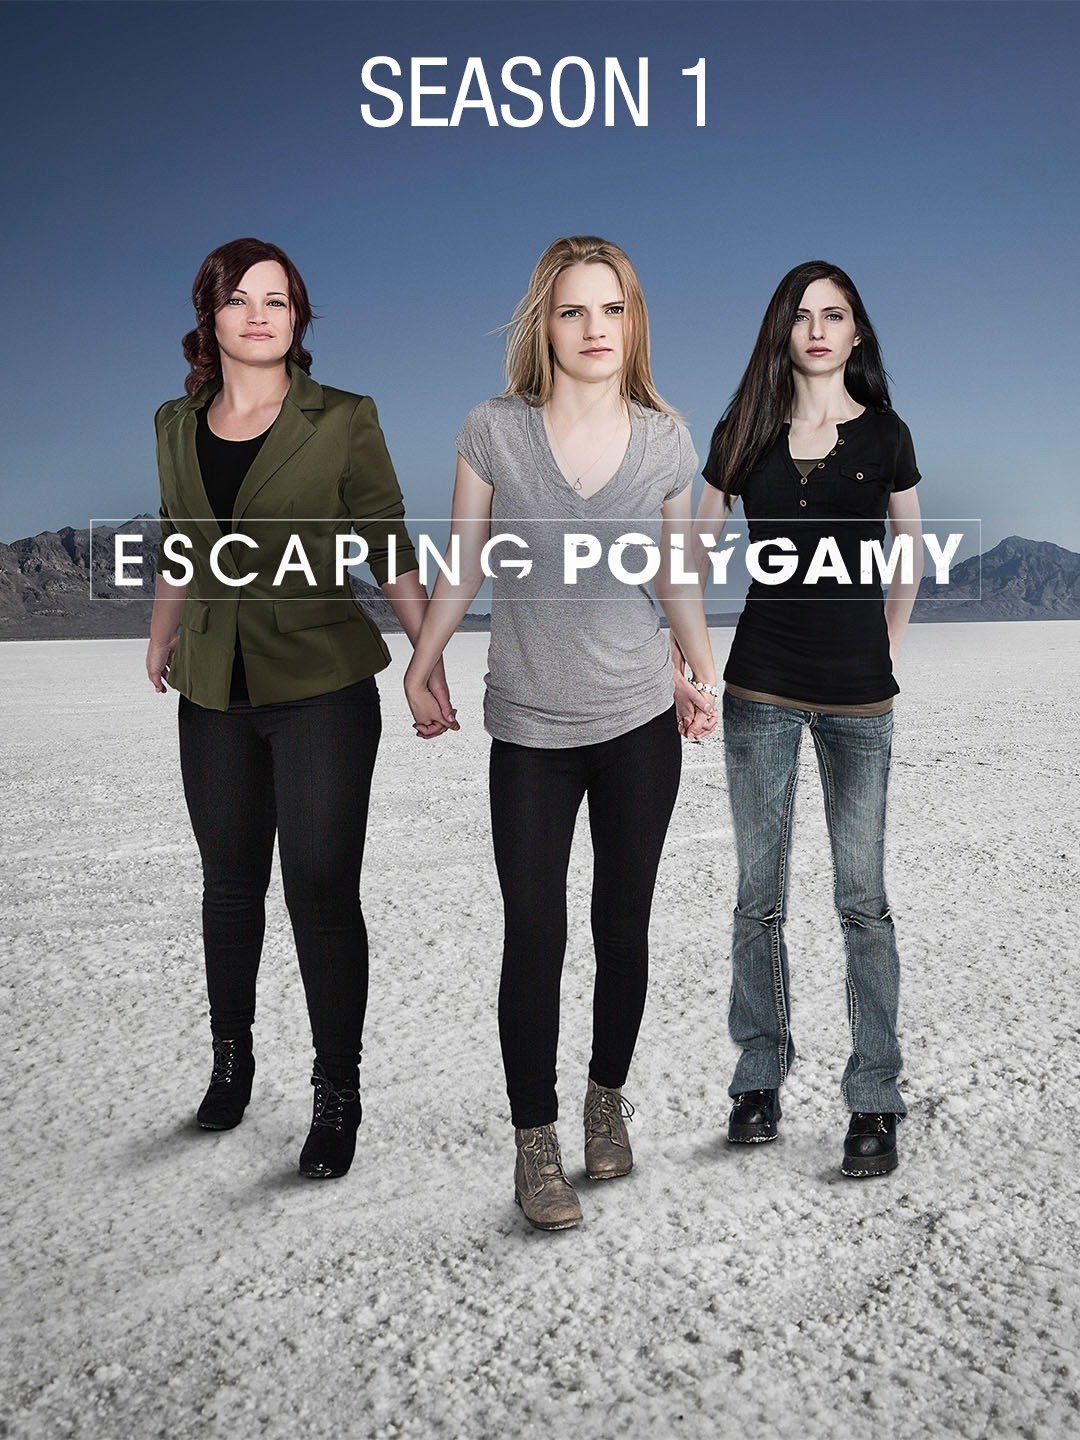 Escaping polygamy leah